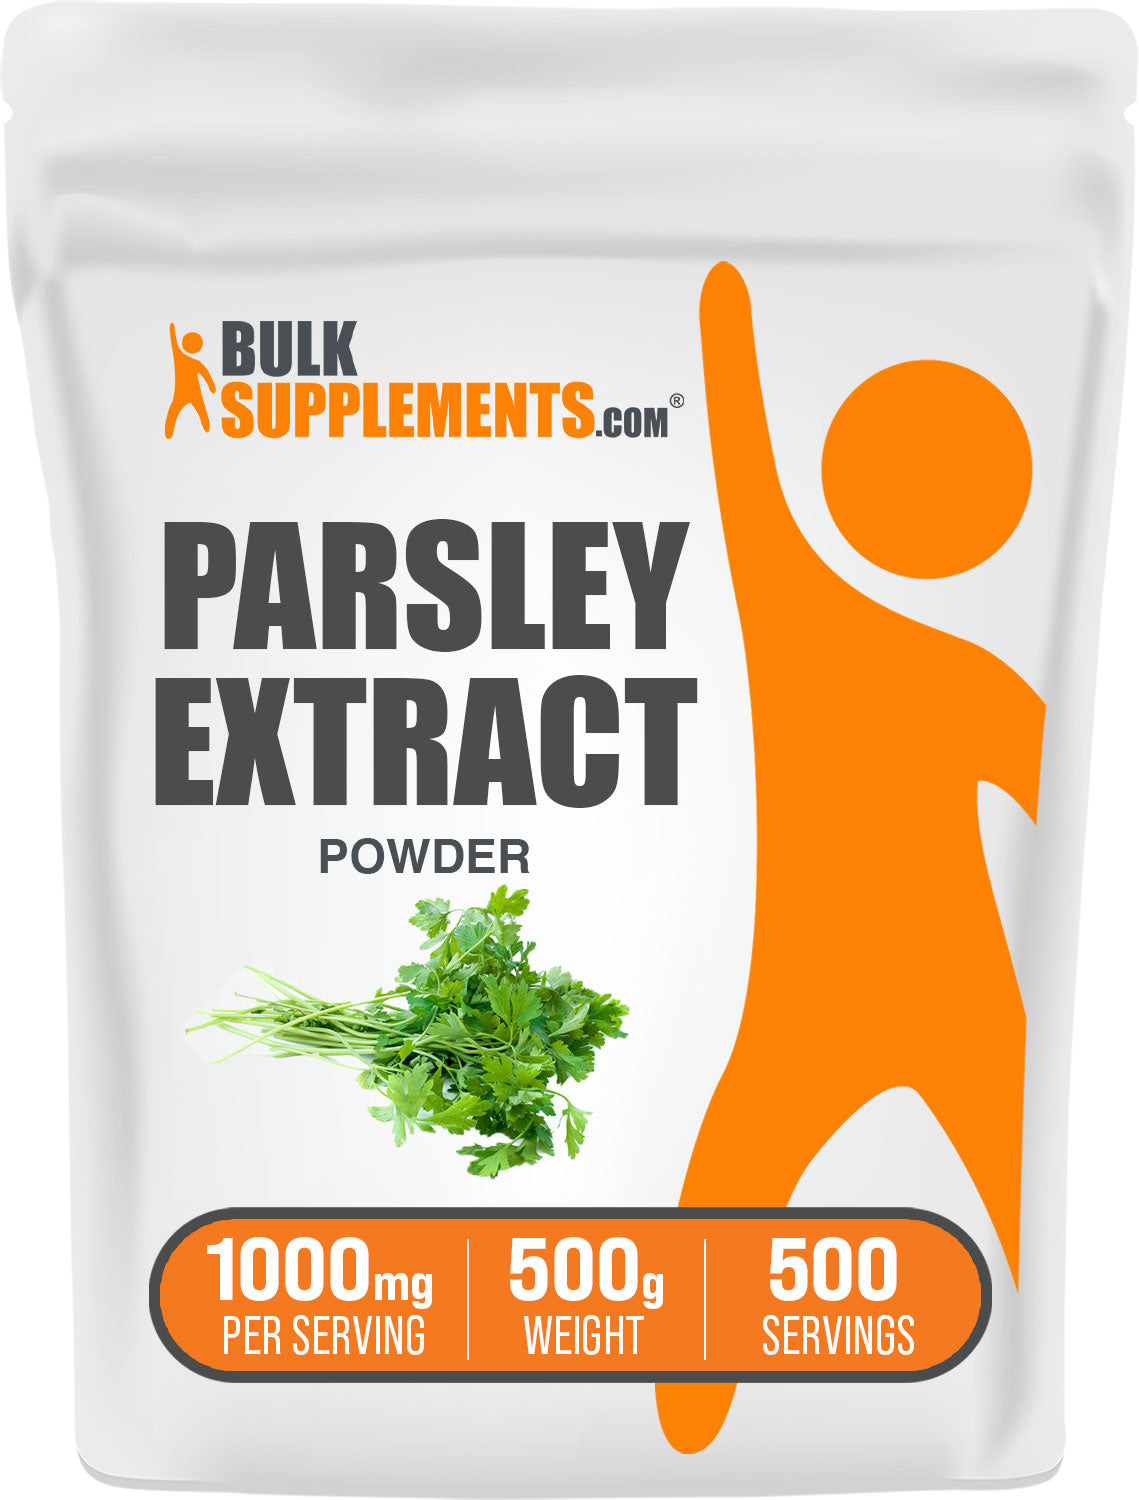 BulkSupplements.com Parsley Extract Powder 500g Bag 